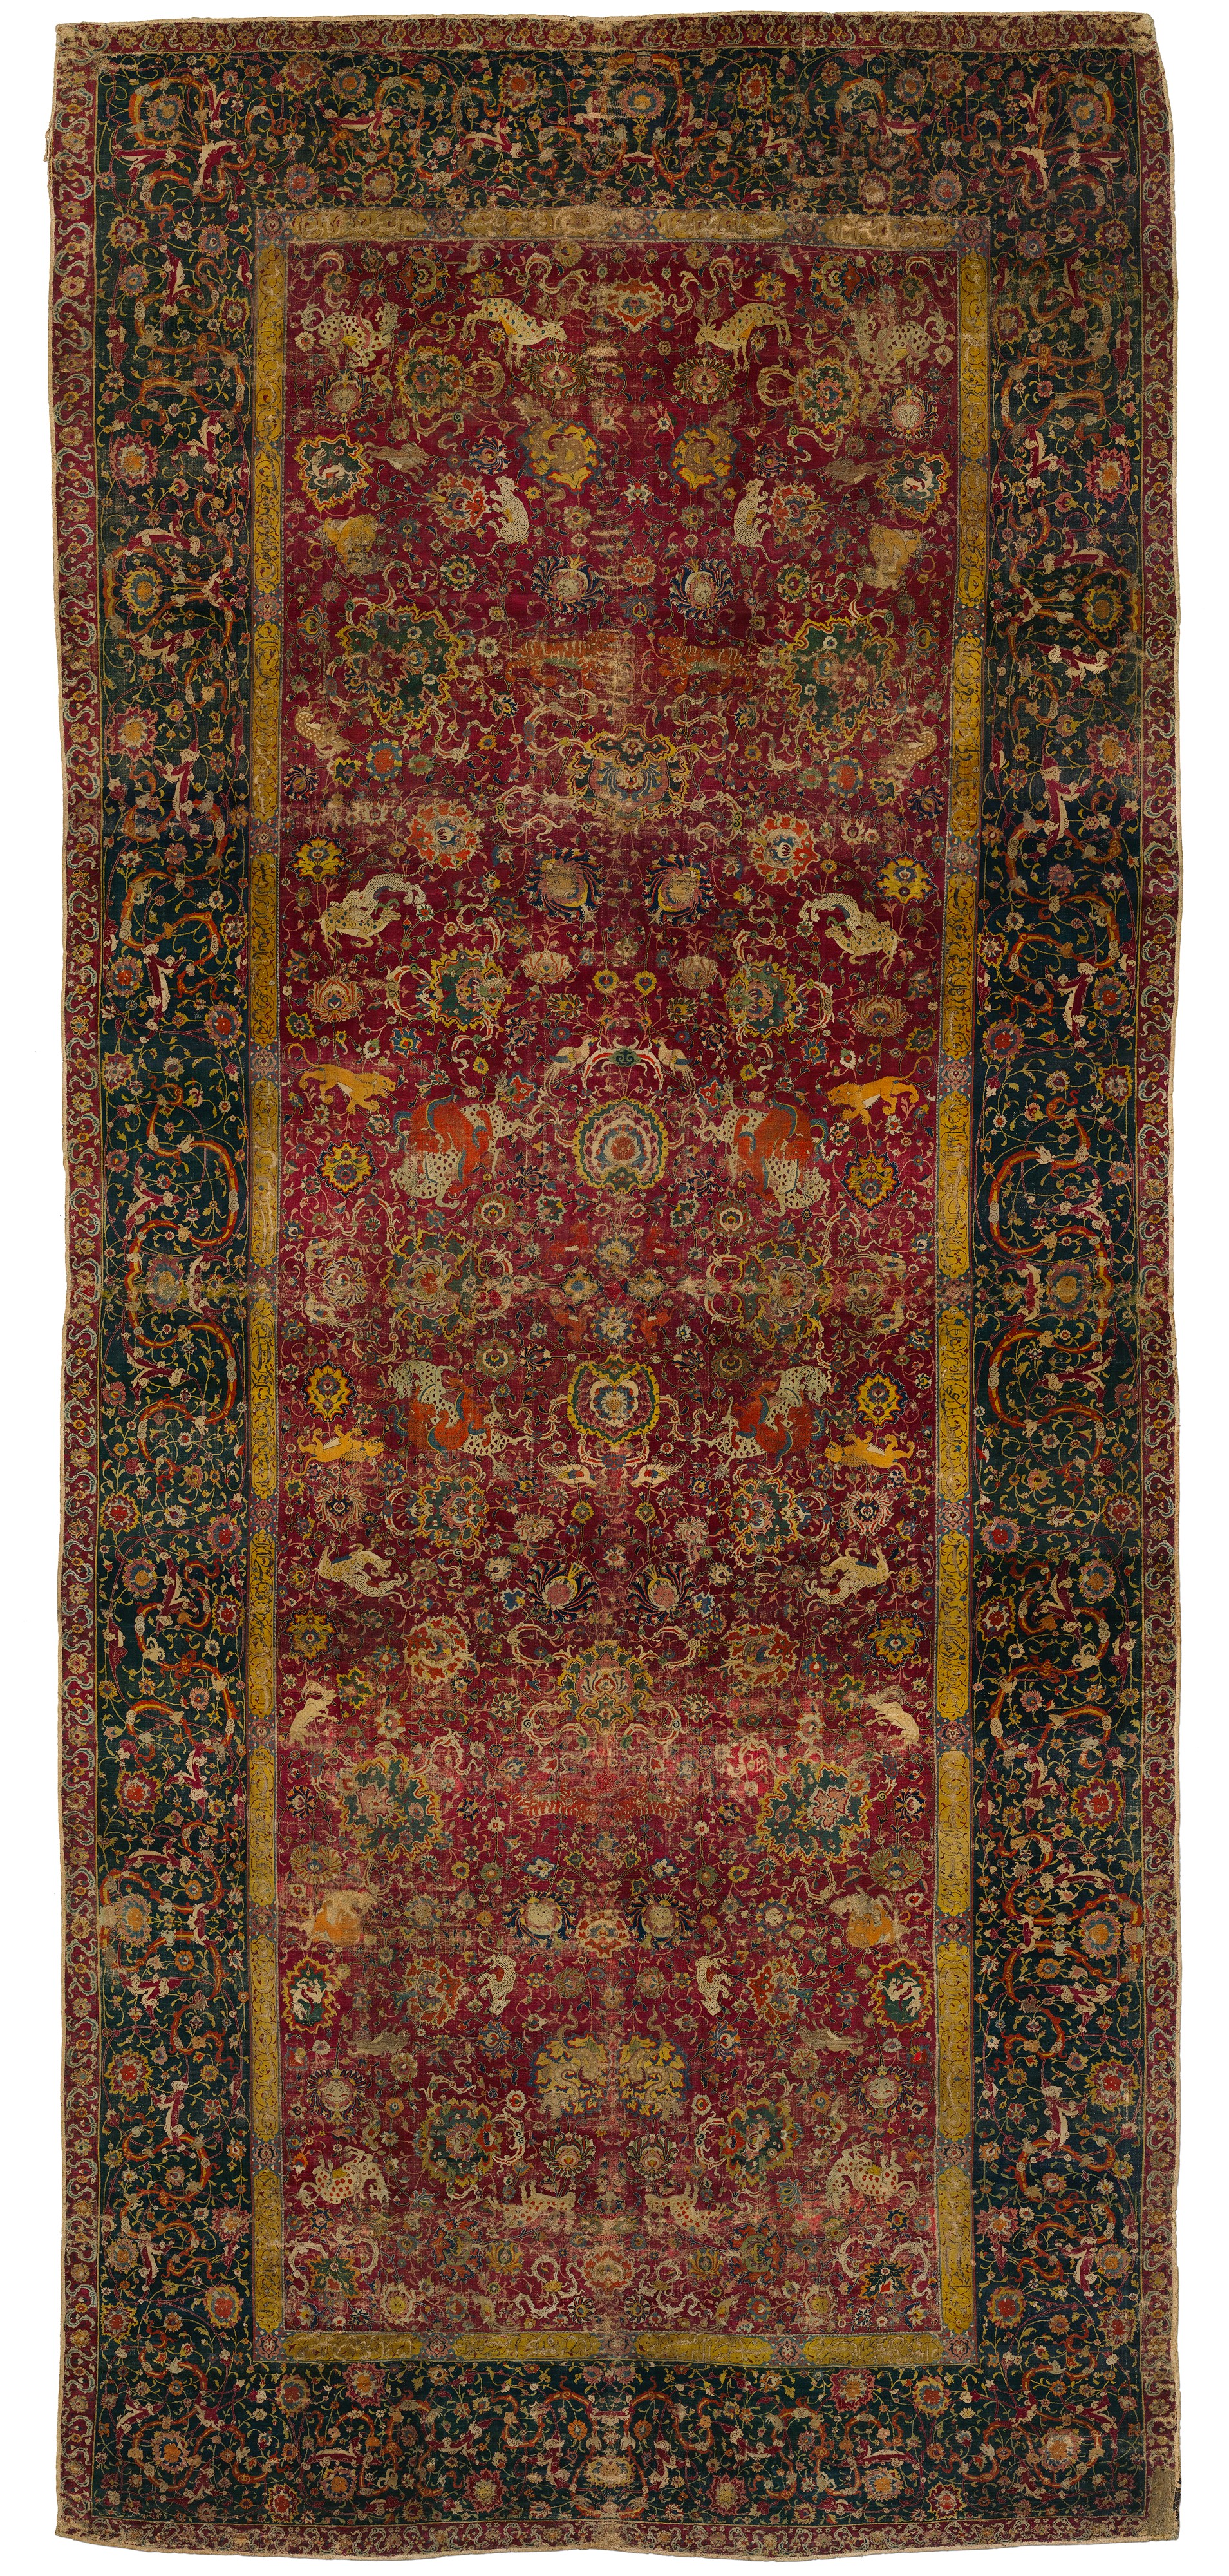 The Emperor's Carpet  The Metropolitan Museum of Art